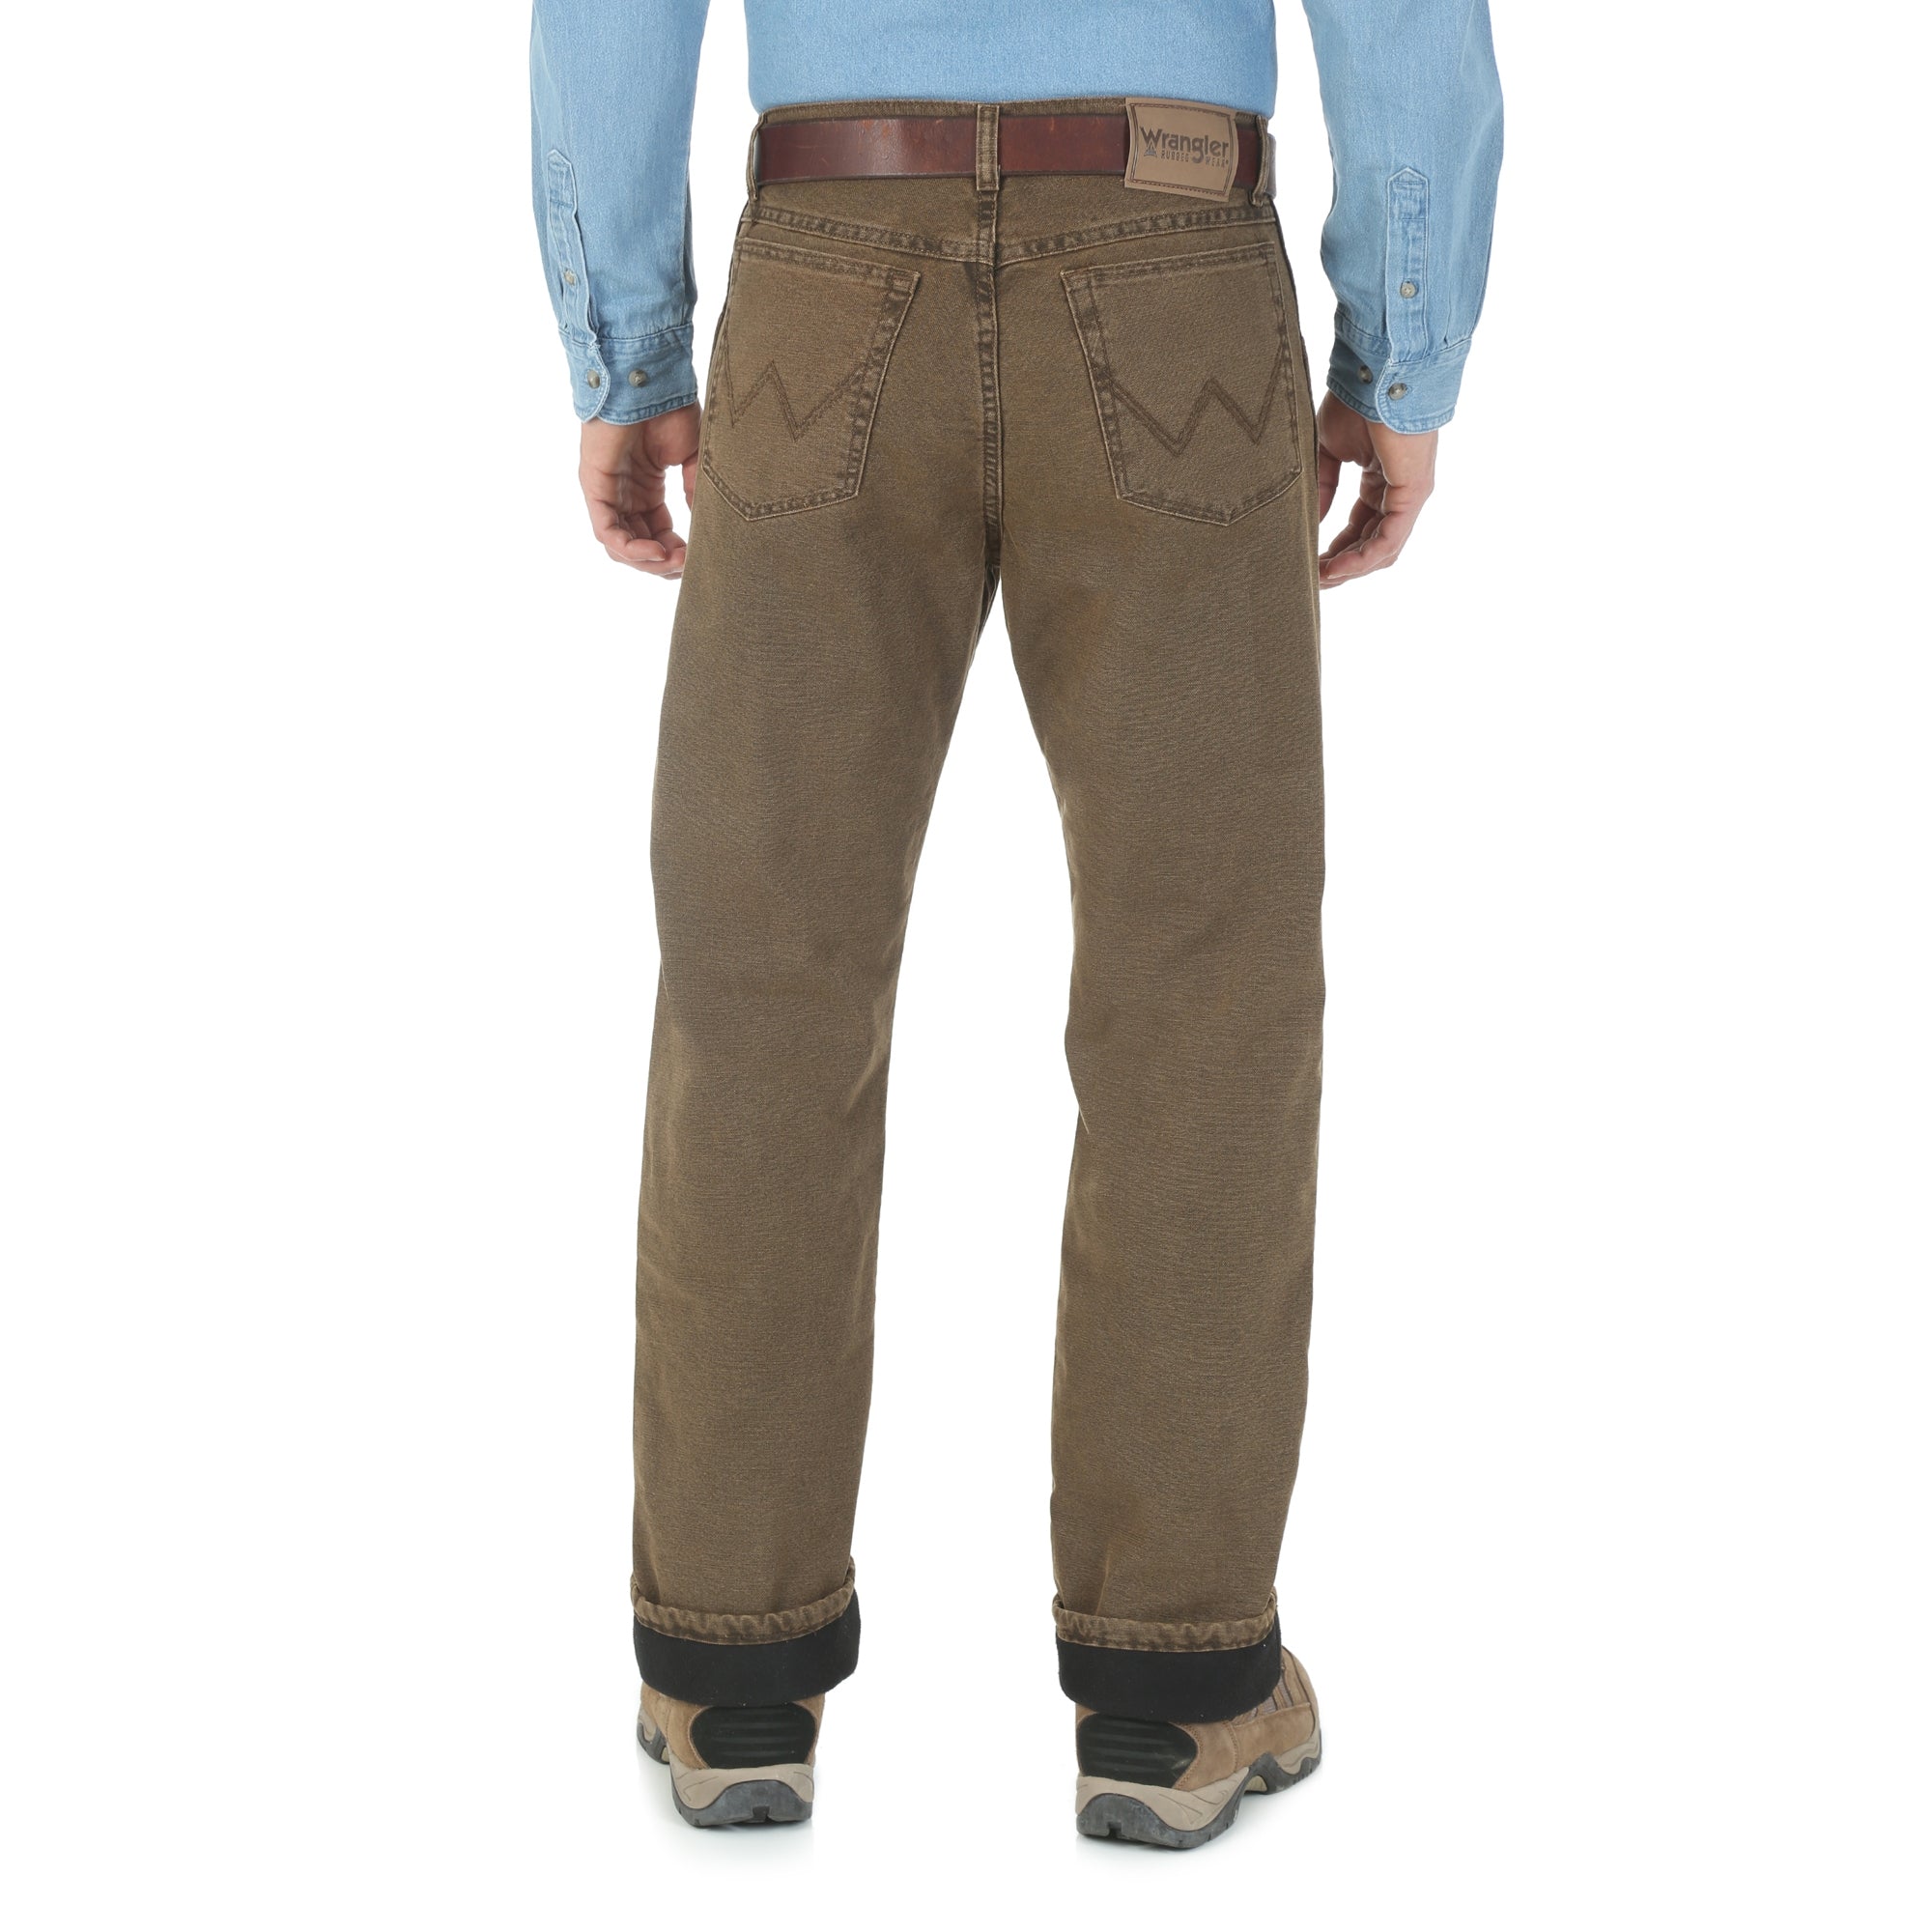 Wrangler Men's Rugged Thermal Jeans Good's Online